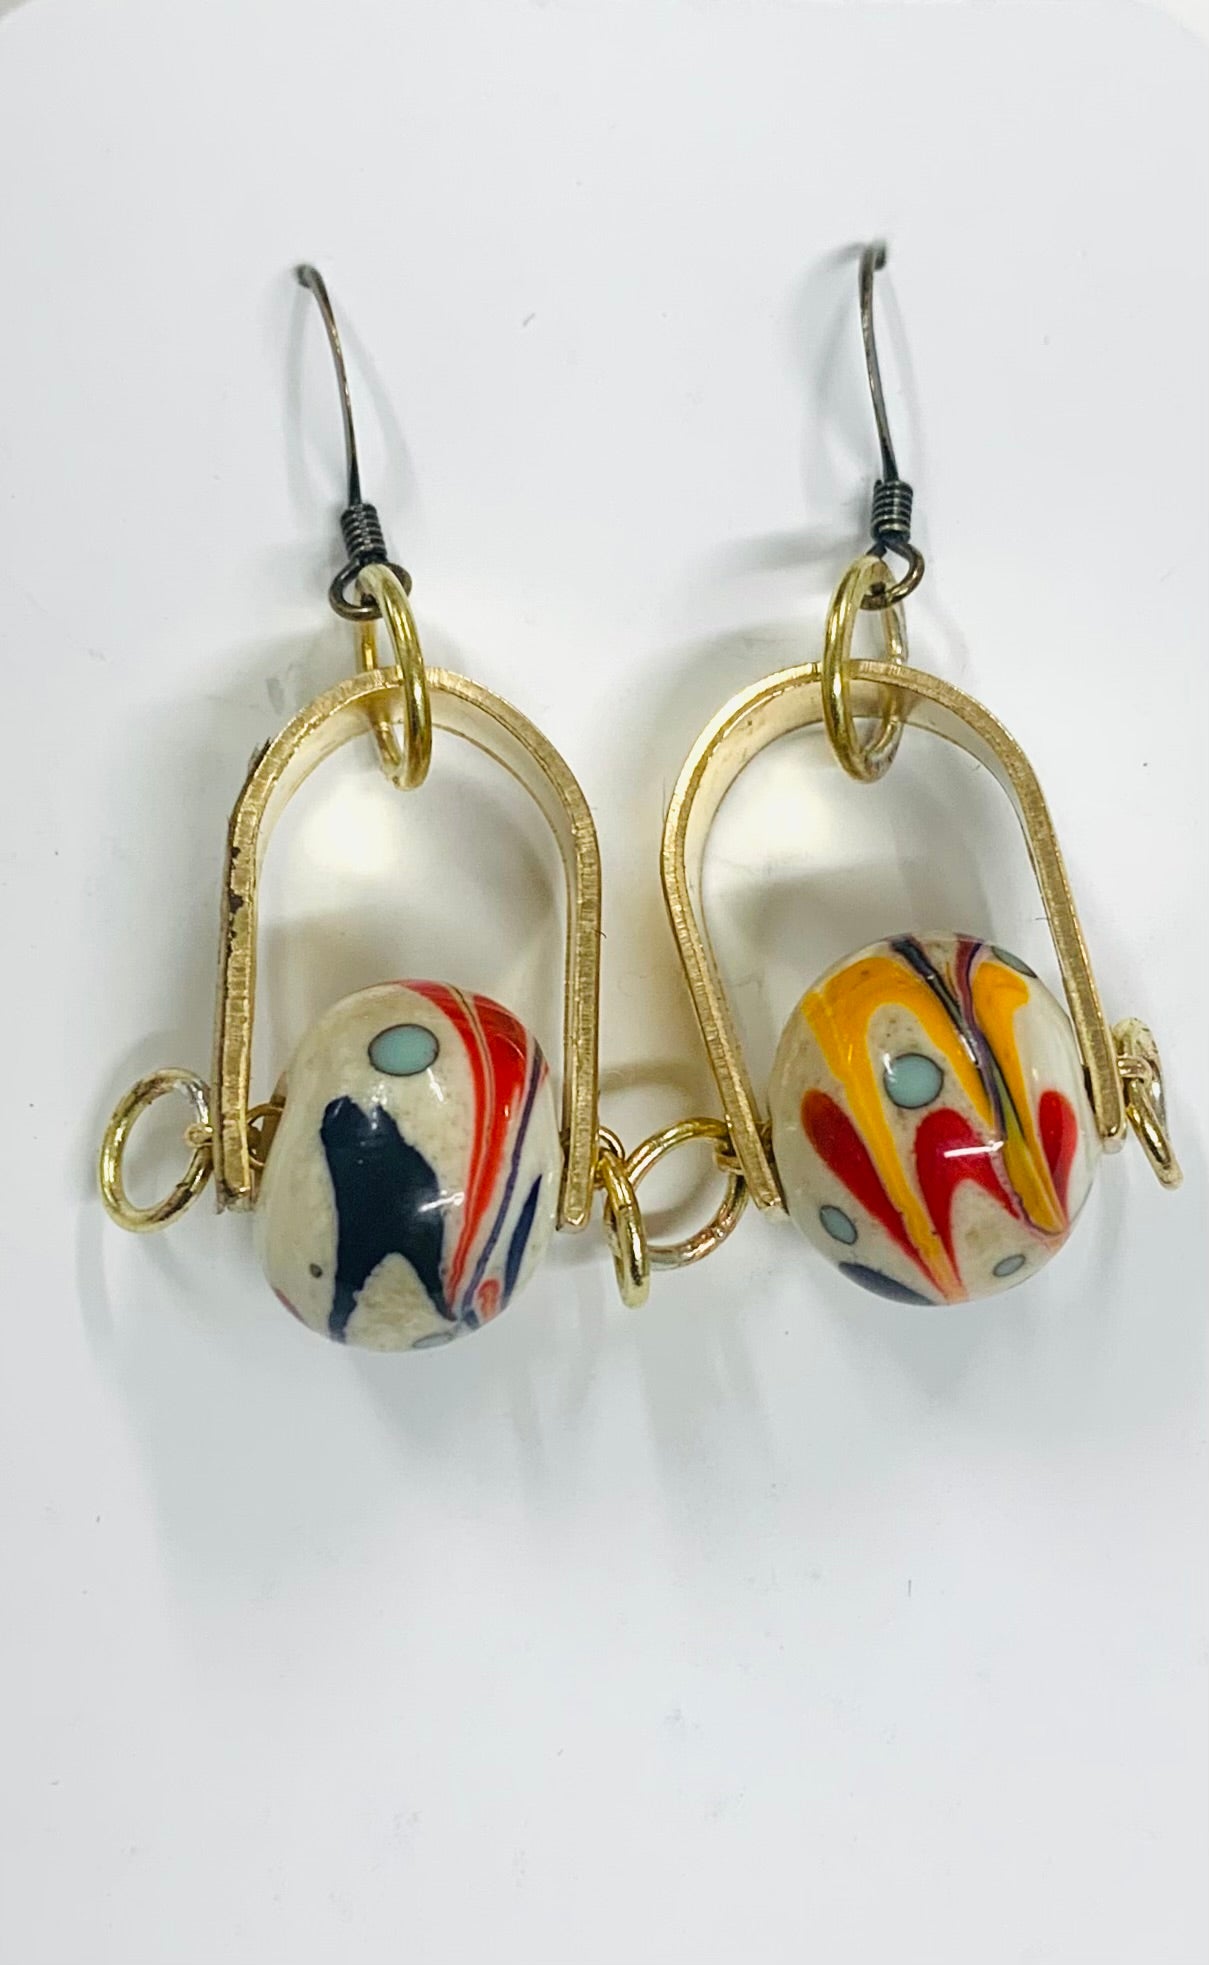 U shape earthy Murano glass earrings